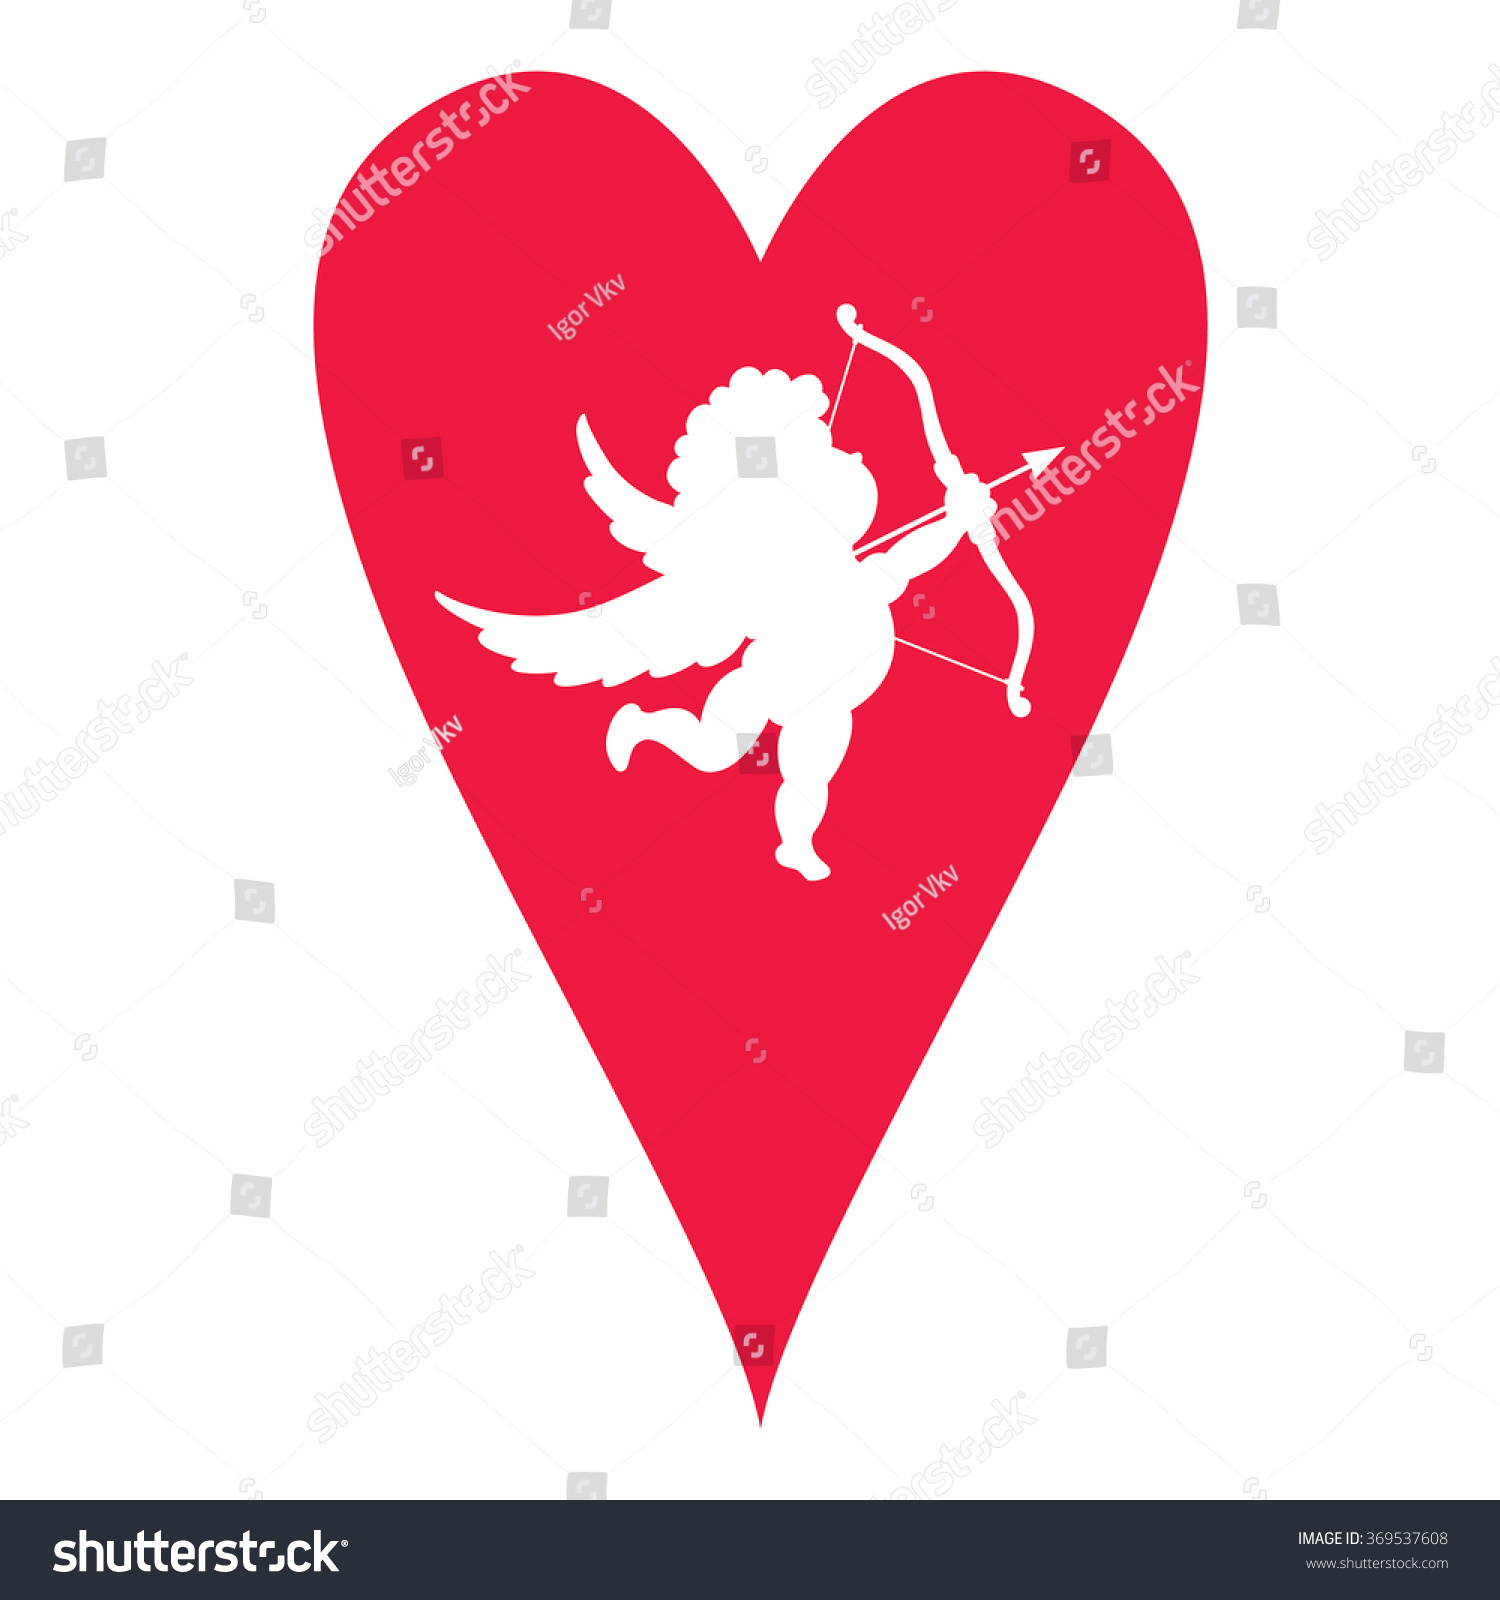 Silhouette Cupid Heart Vector Illustration Stock Vector Royalty Free 369537608 Shutterstock 8803